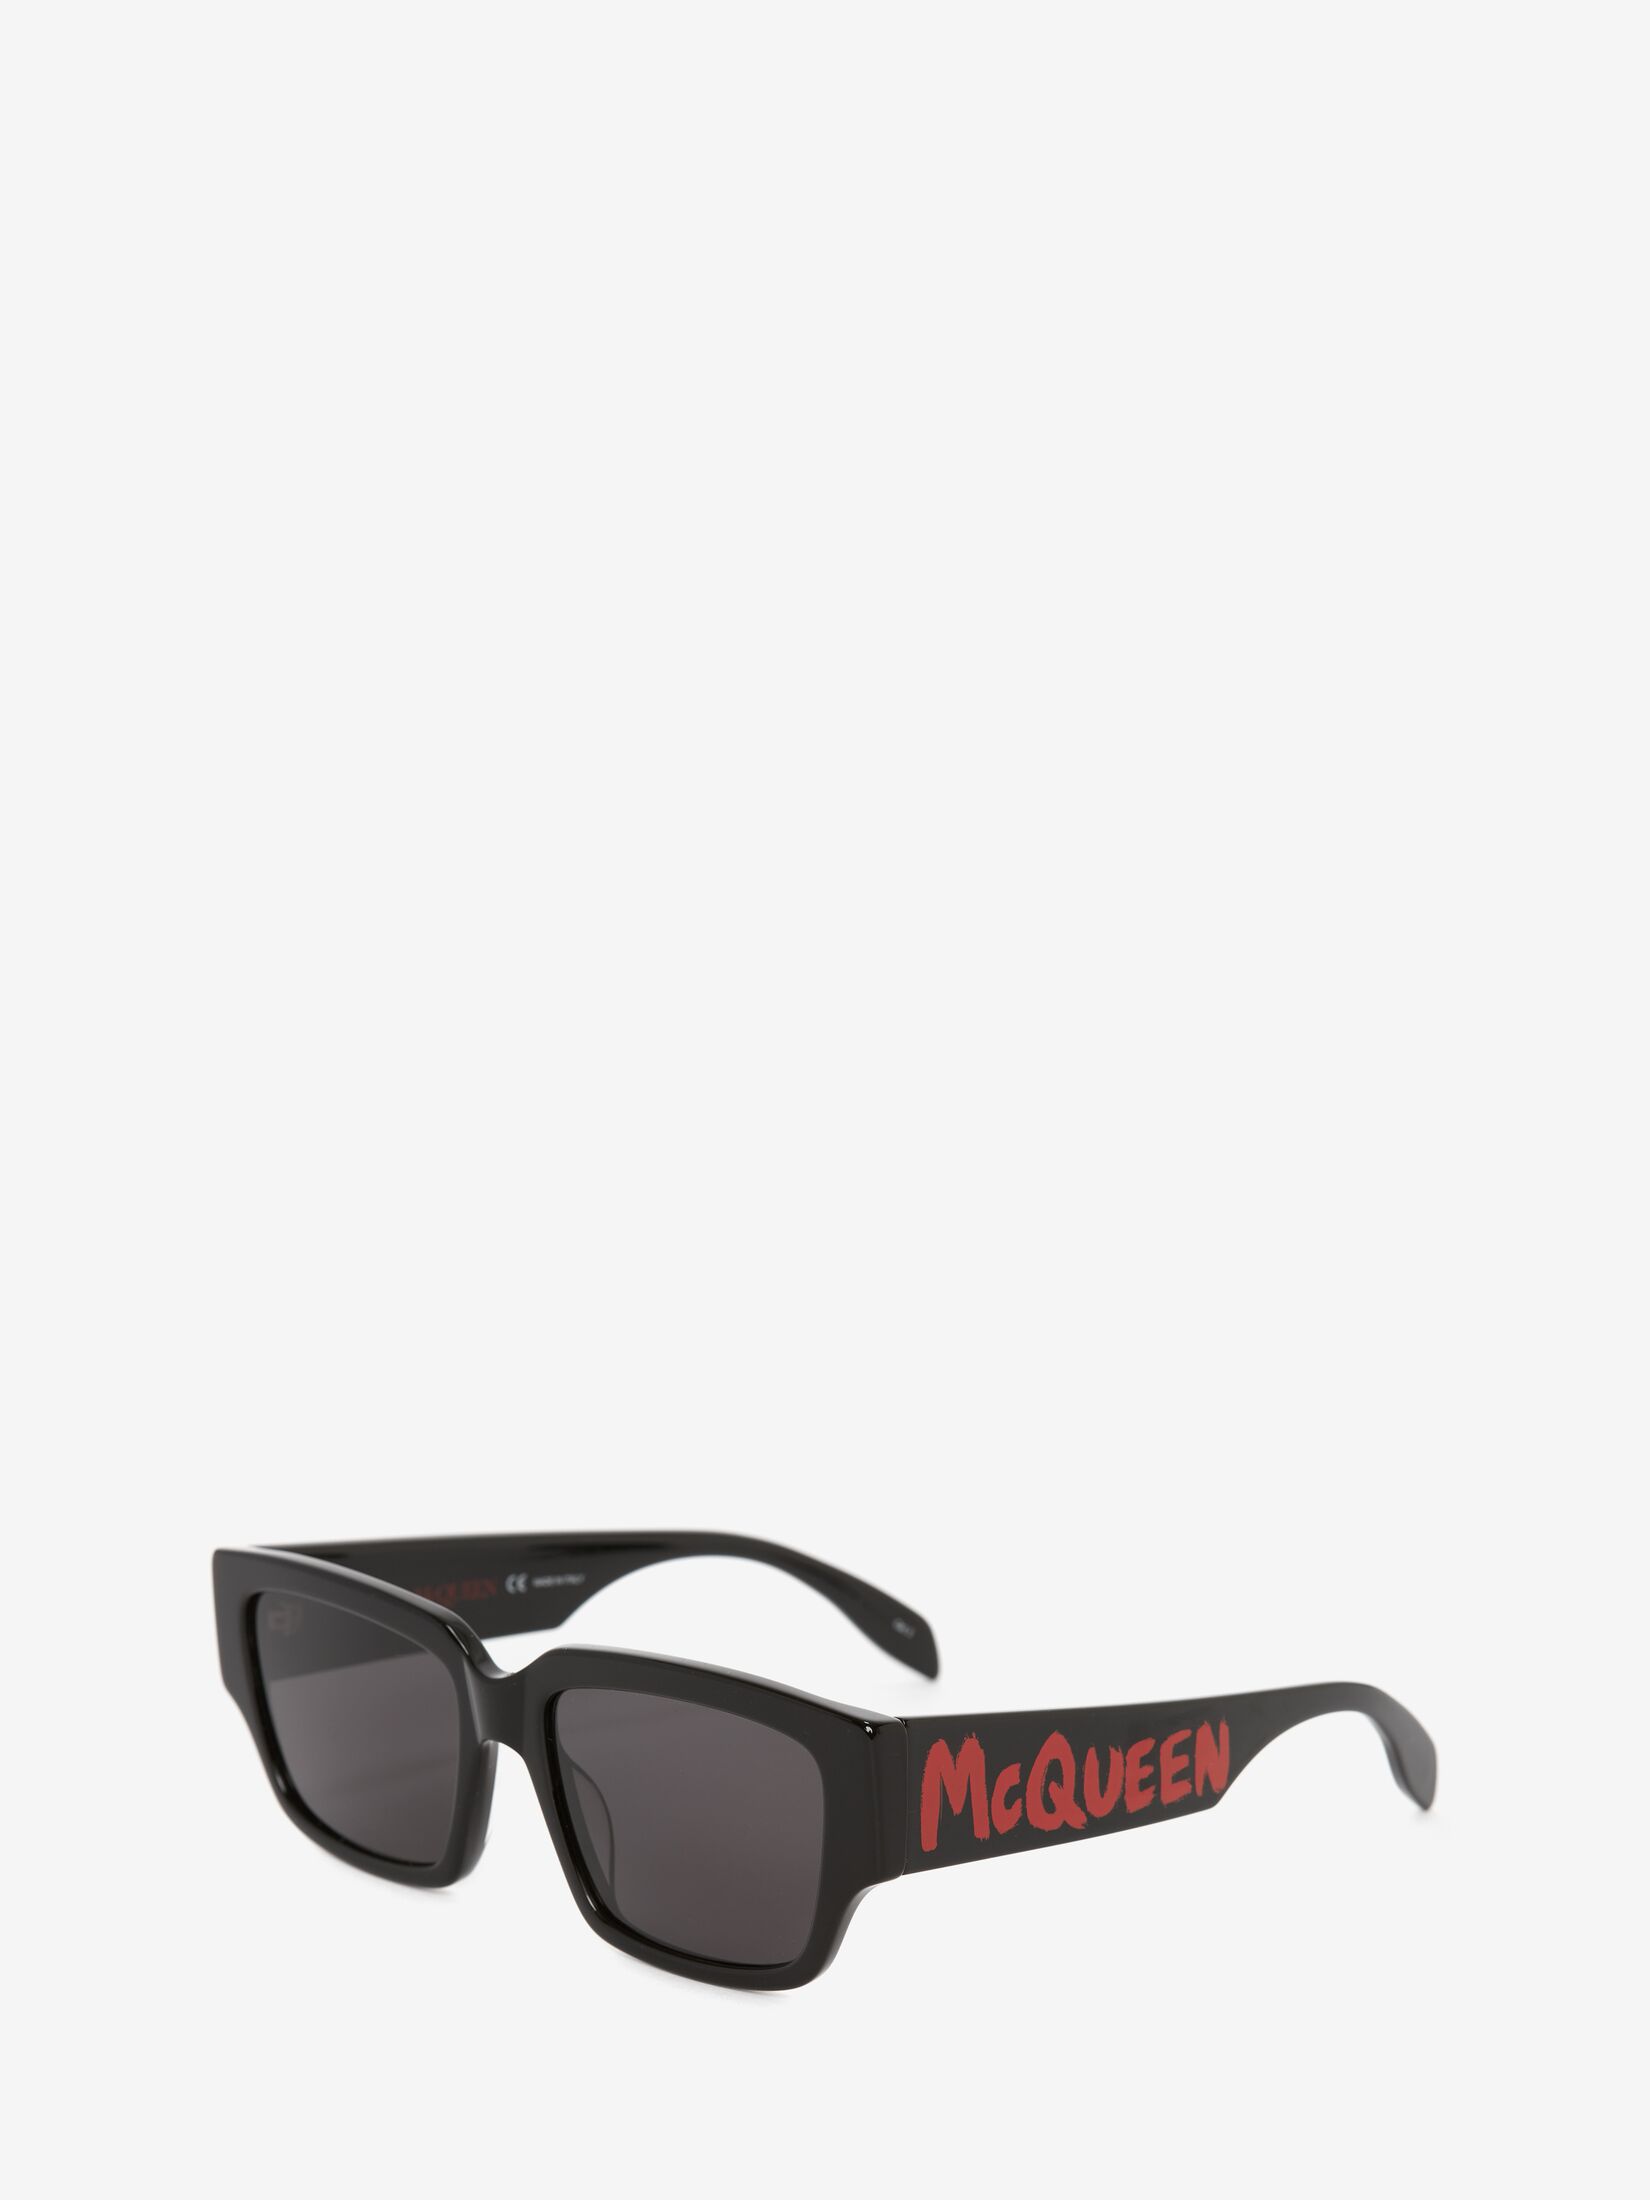 McQueen Graffiti Rectangular Sunglasses in Black/Red | Alexander